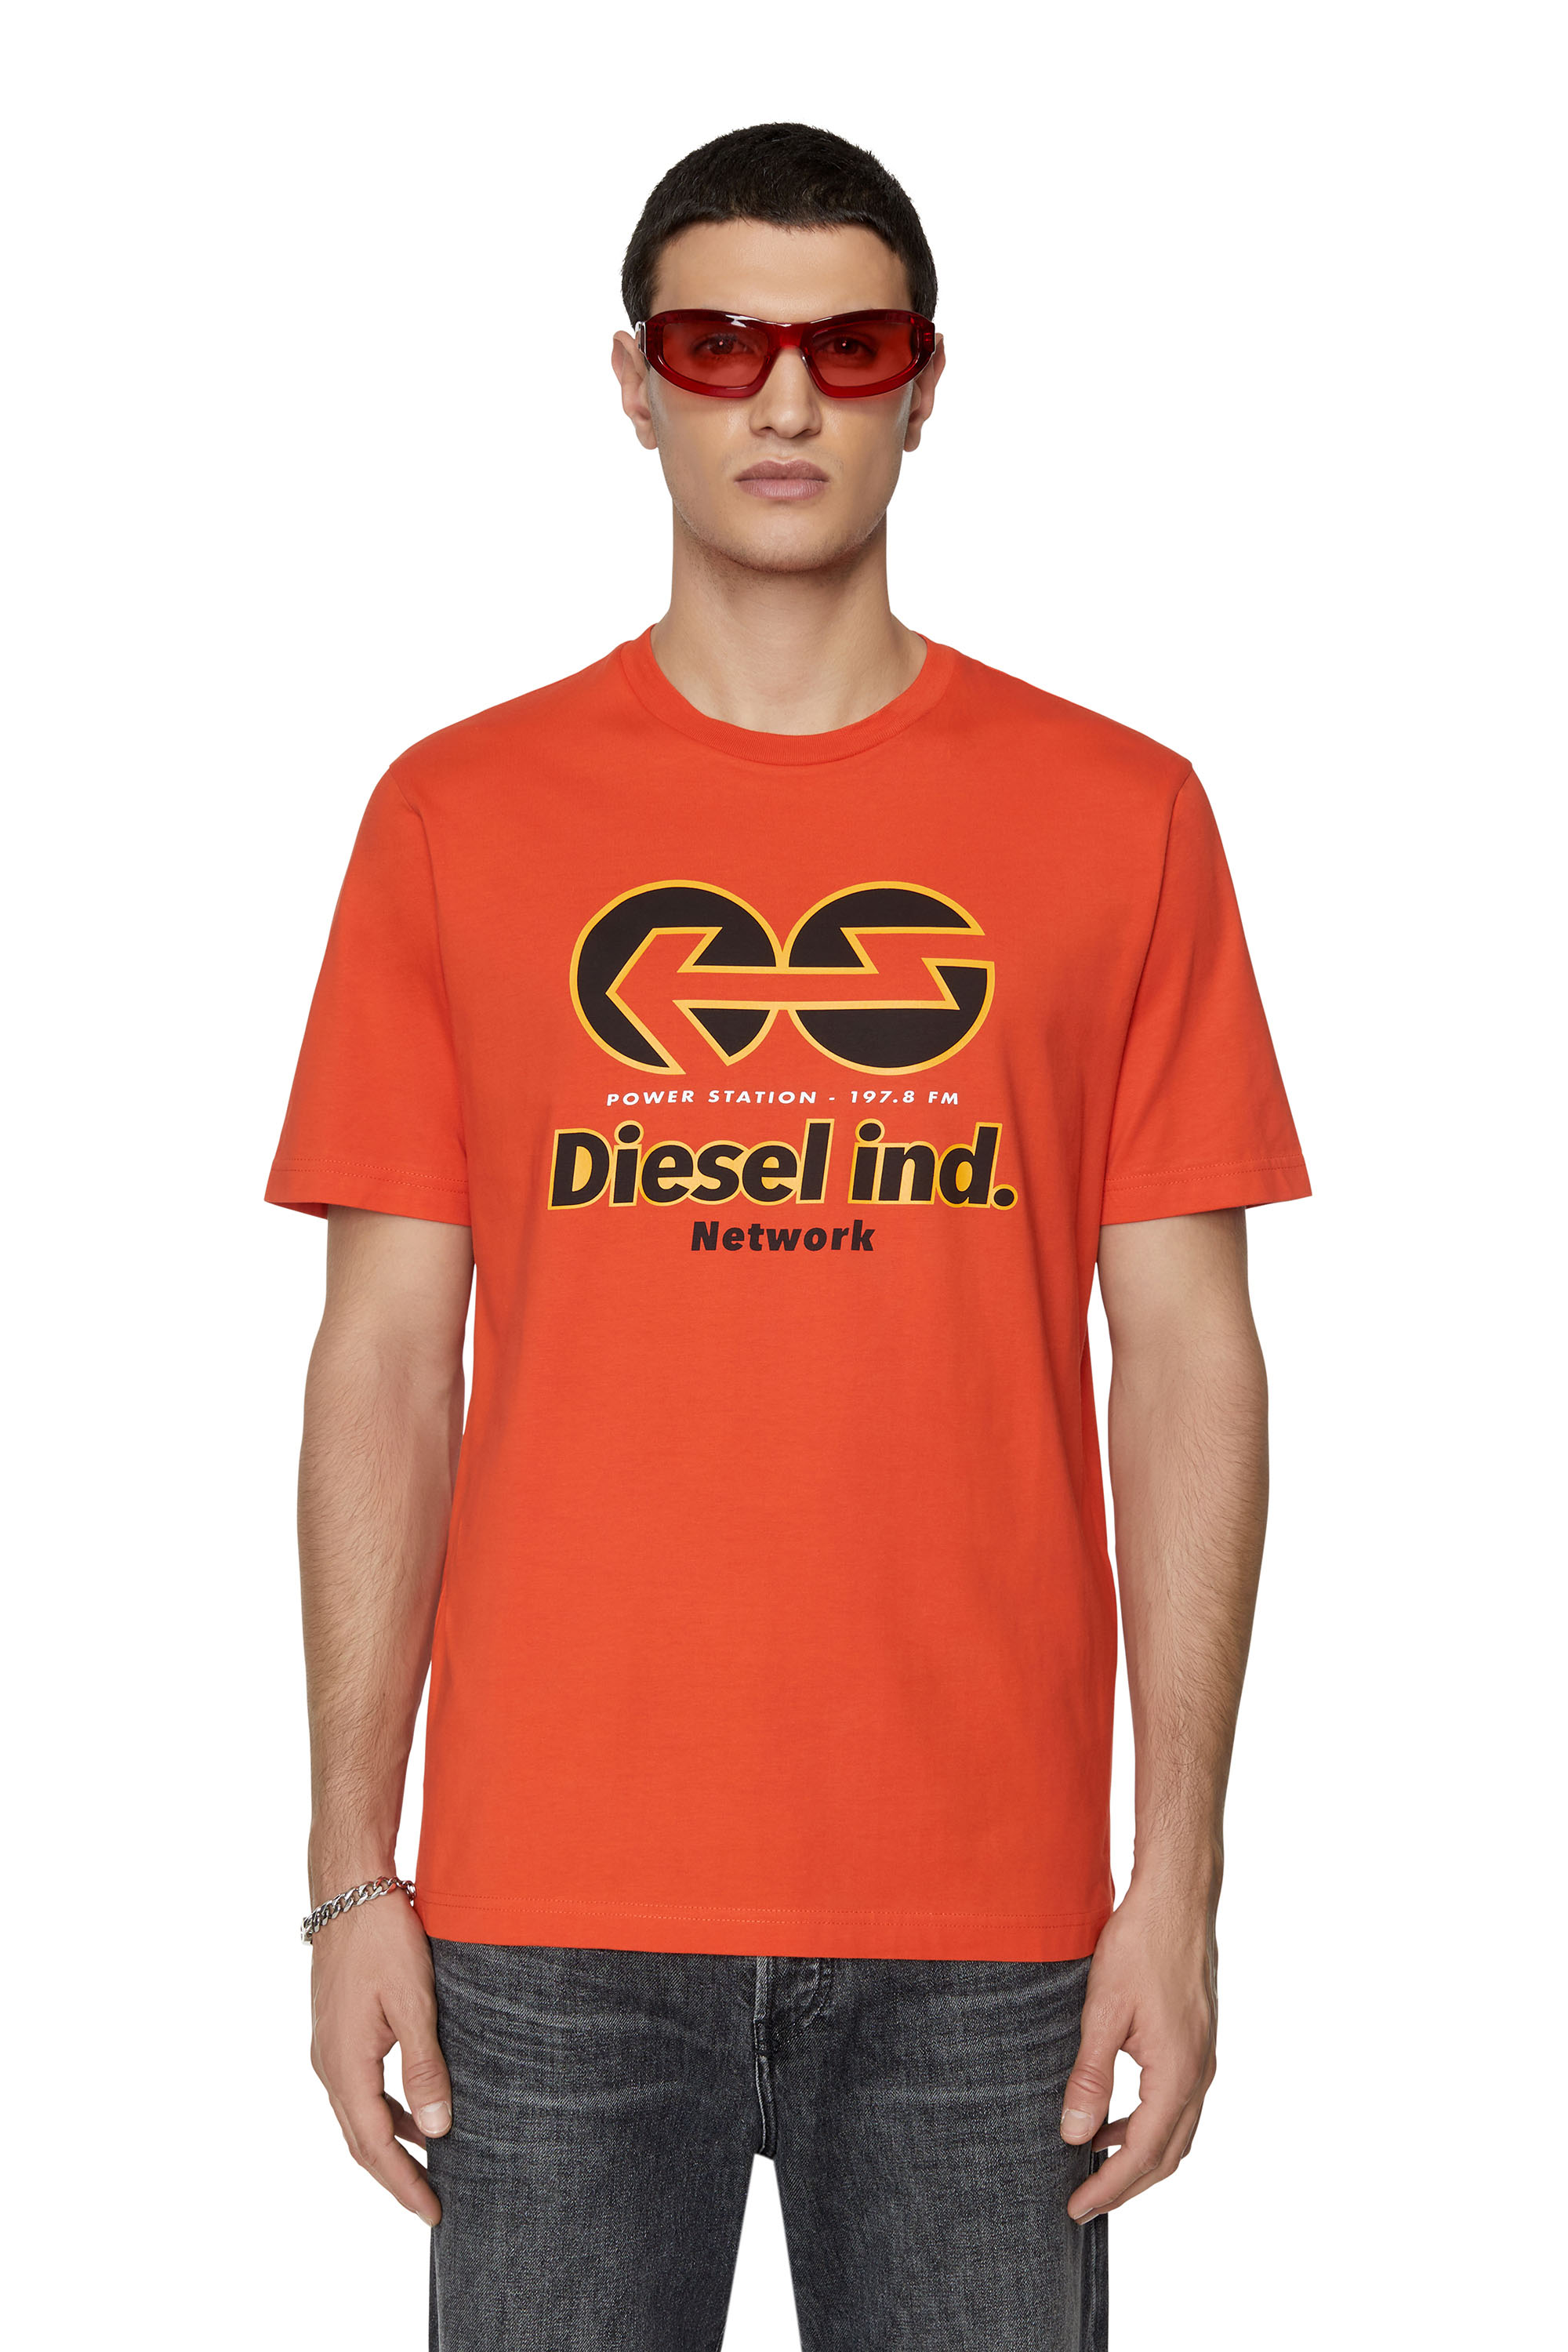 Diesel - T-JUST-E18, Orange - Image 1